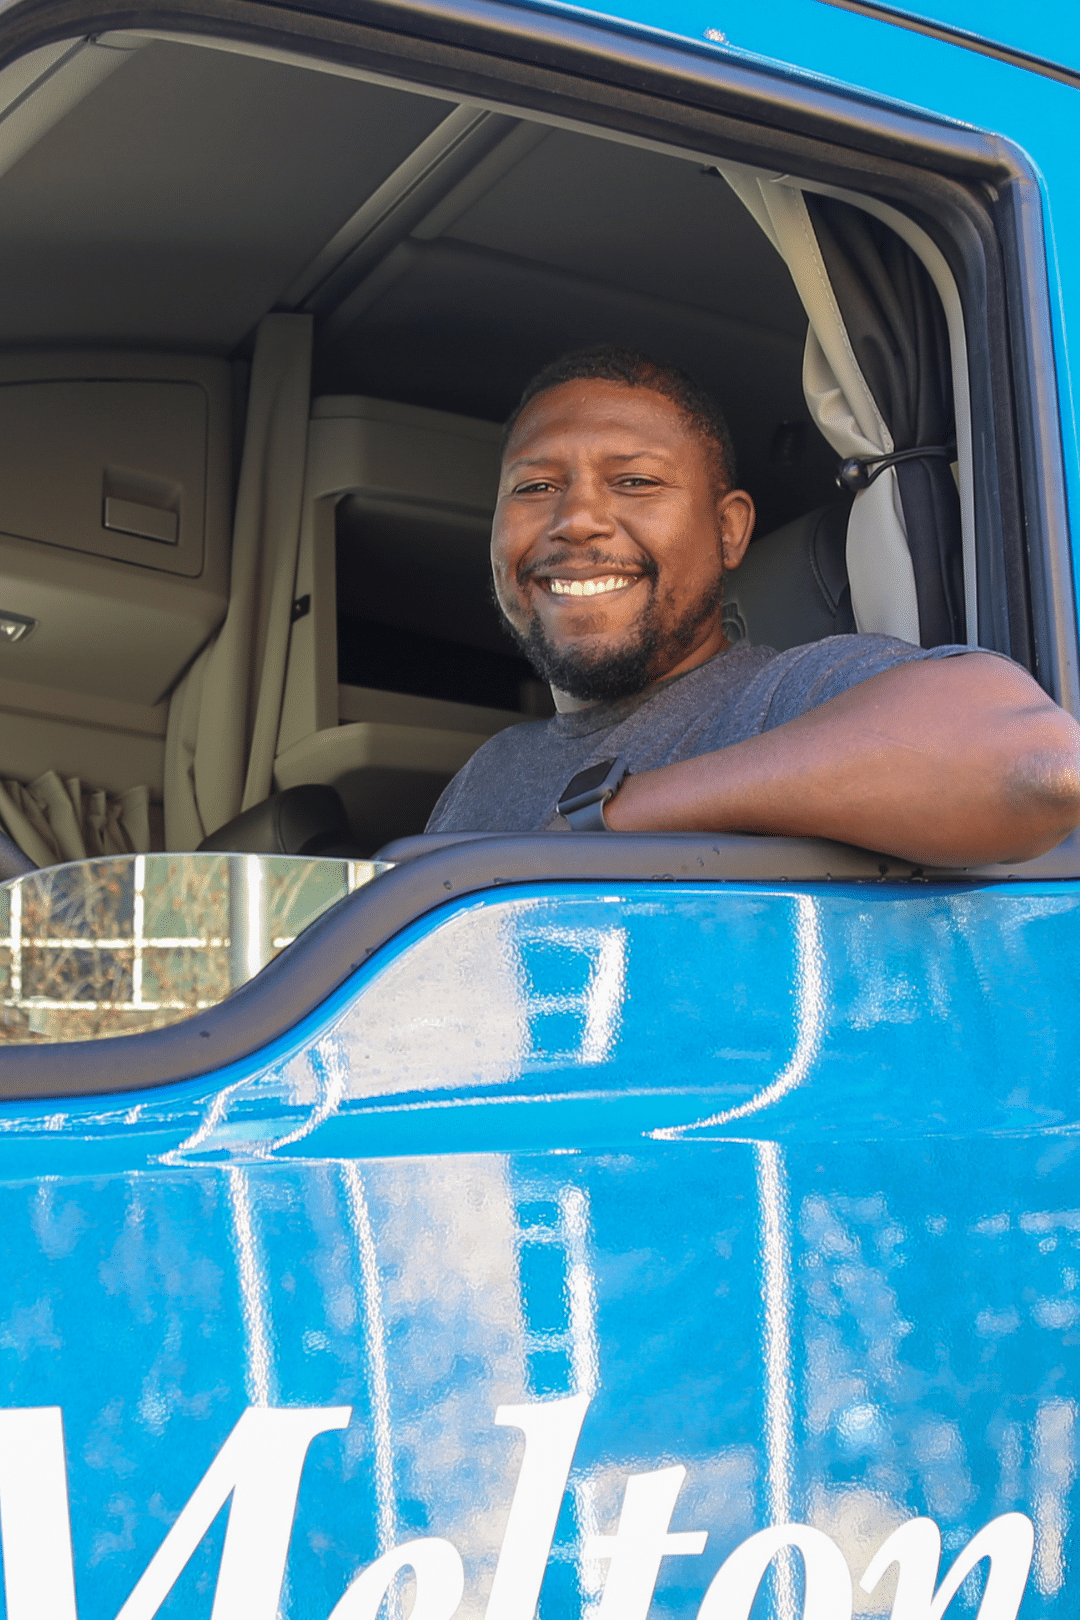 Truck OTR driver smiling in a Melton truck